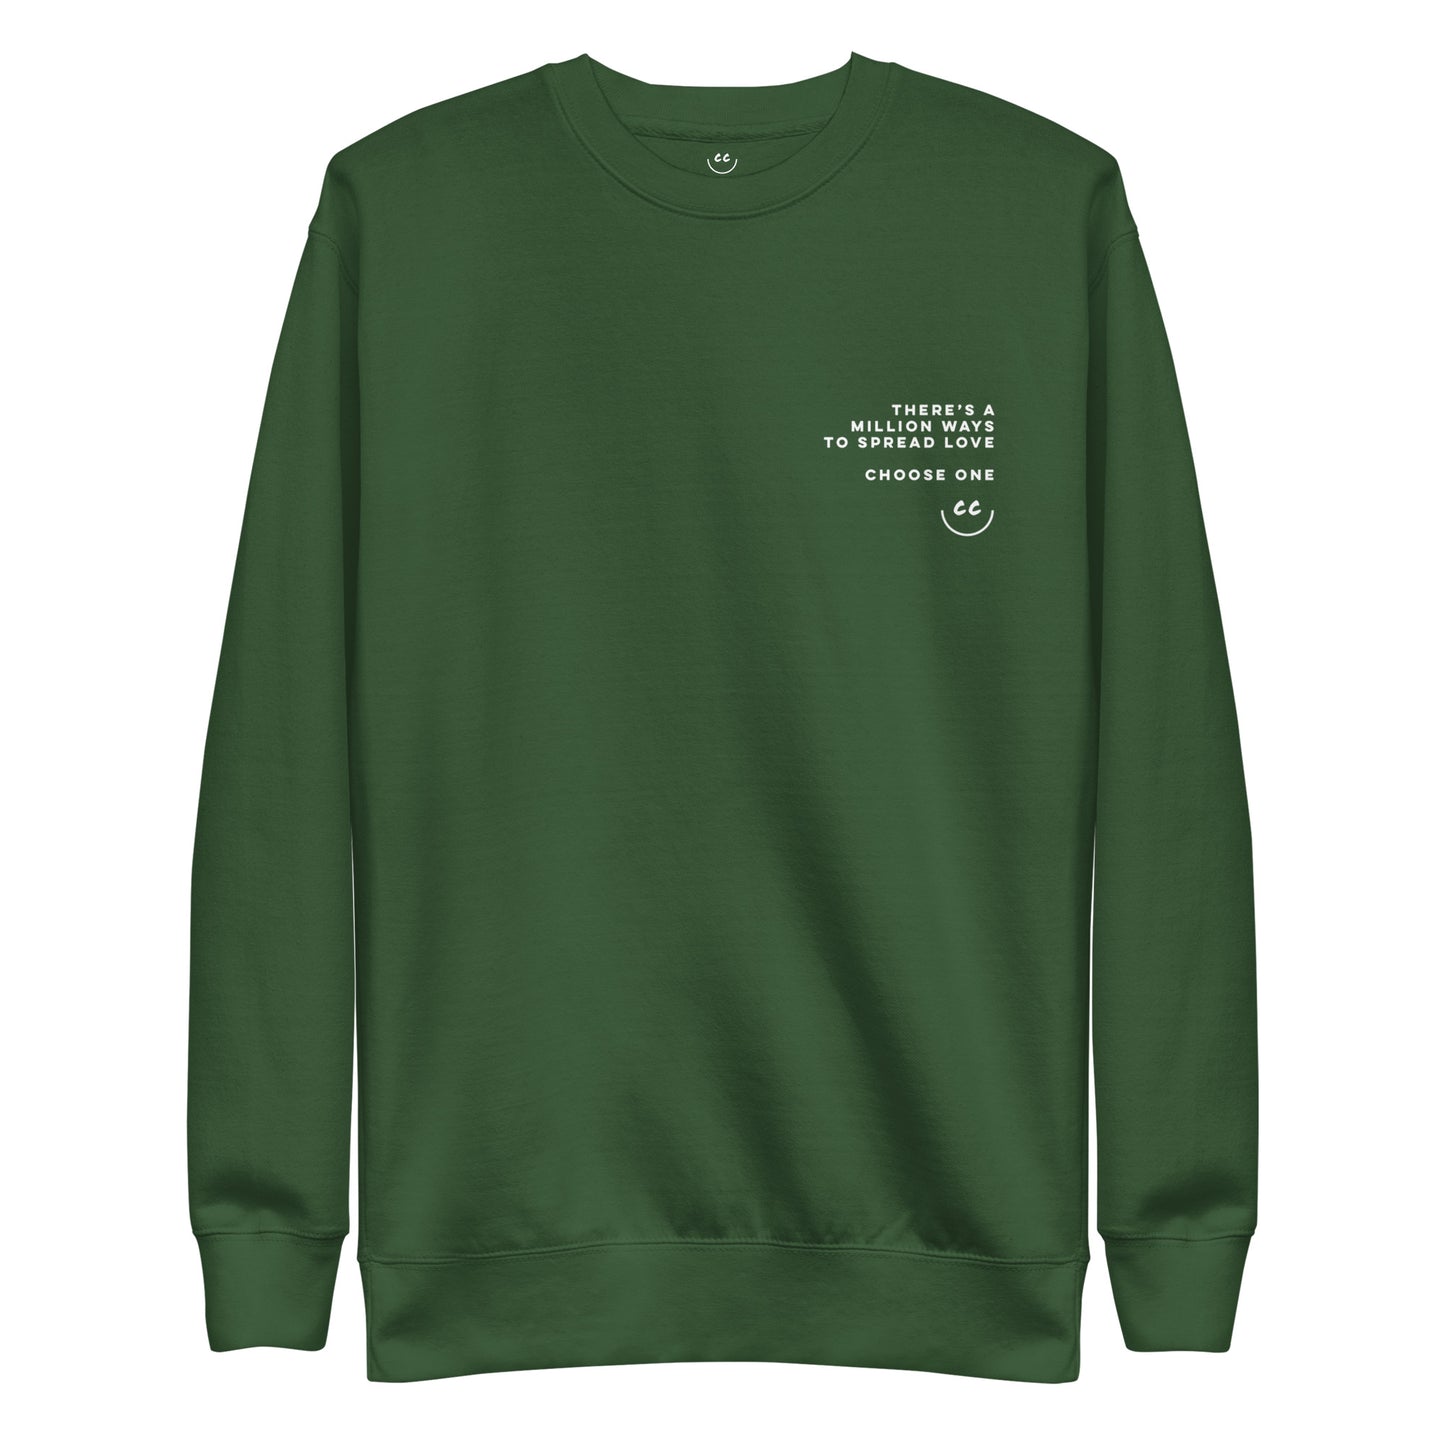 Million Smiles Fleece in Forest Green - Sweatshirt